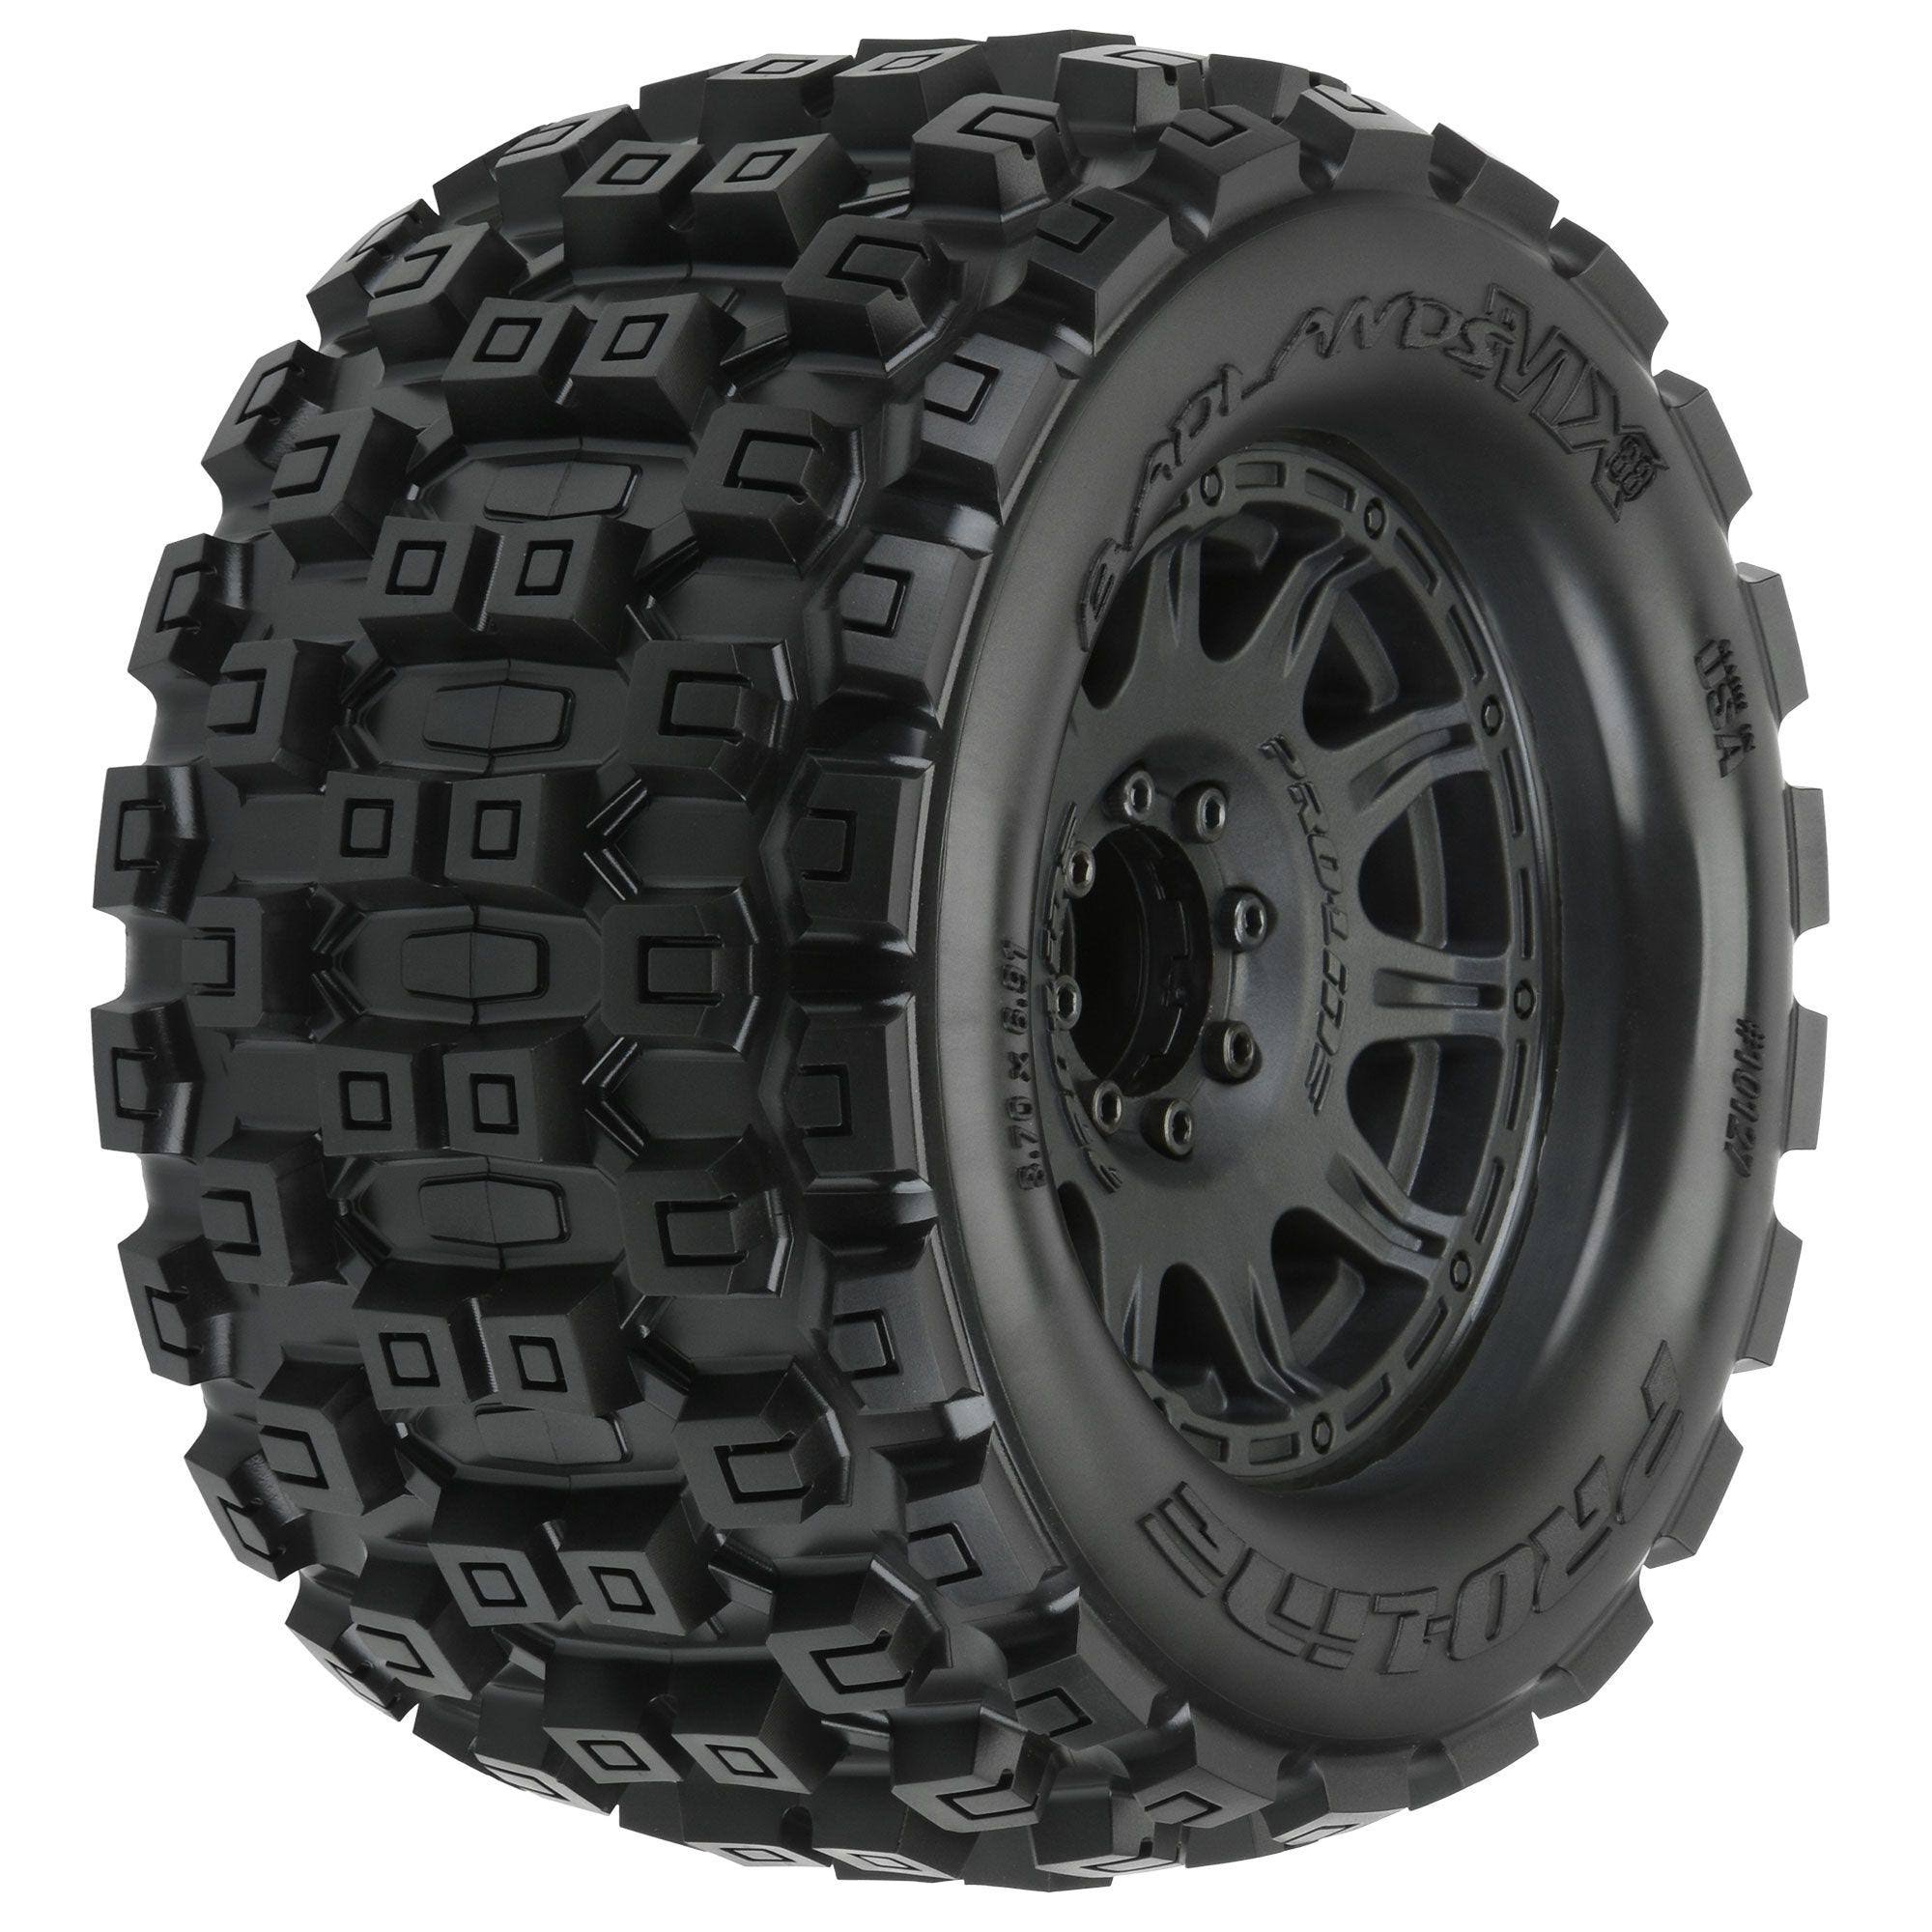 Pro-Line Racing Badlands MX38 3.8" Mounted Raid MT Tires, 8x32 17mm (f/r), PRO1012710